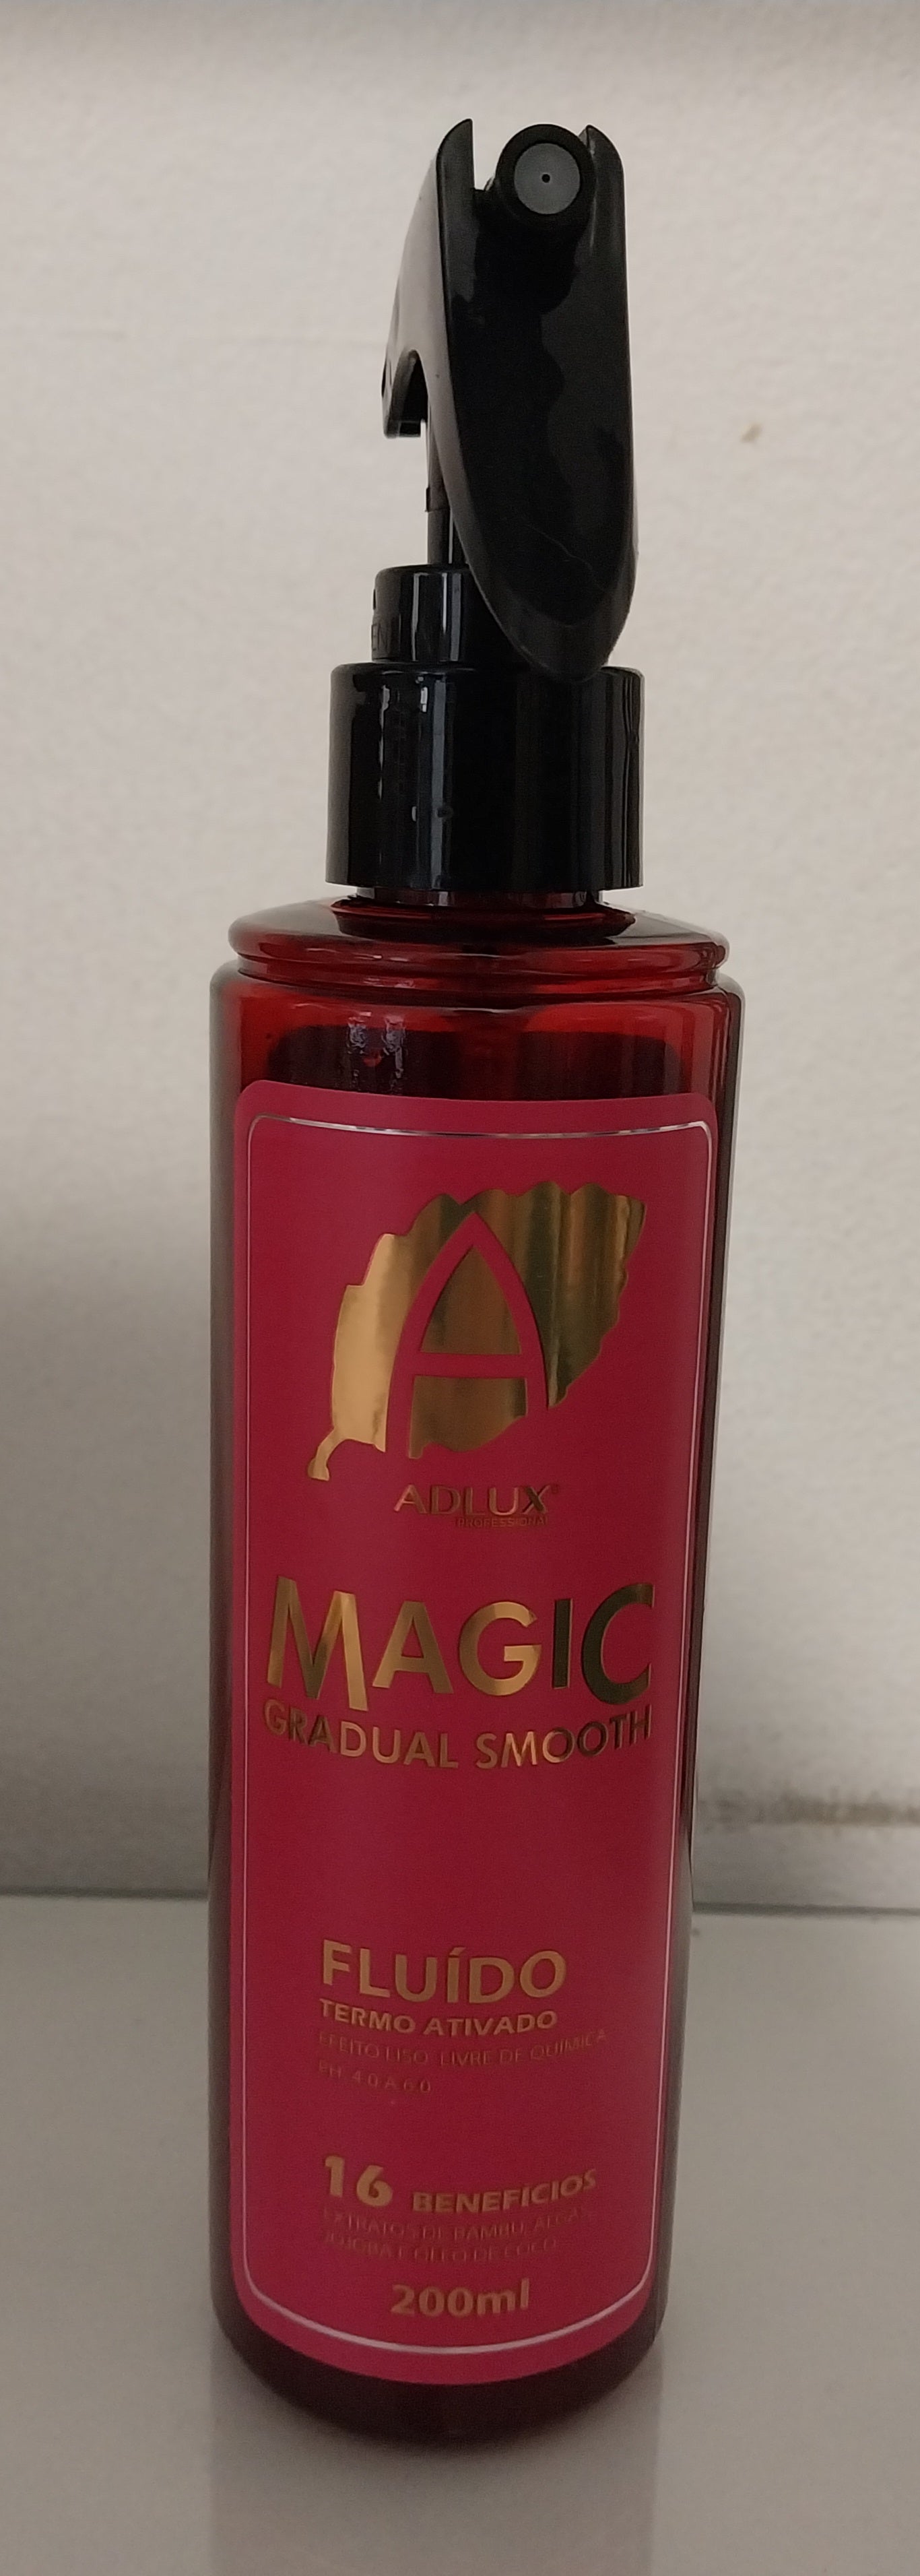 Adlux Hair Fluid Magic Gradual Smooth 16 Benefits Thermoactive Hair Sealing Fluid 200ml - Adlux